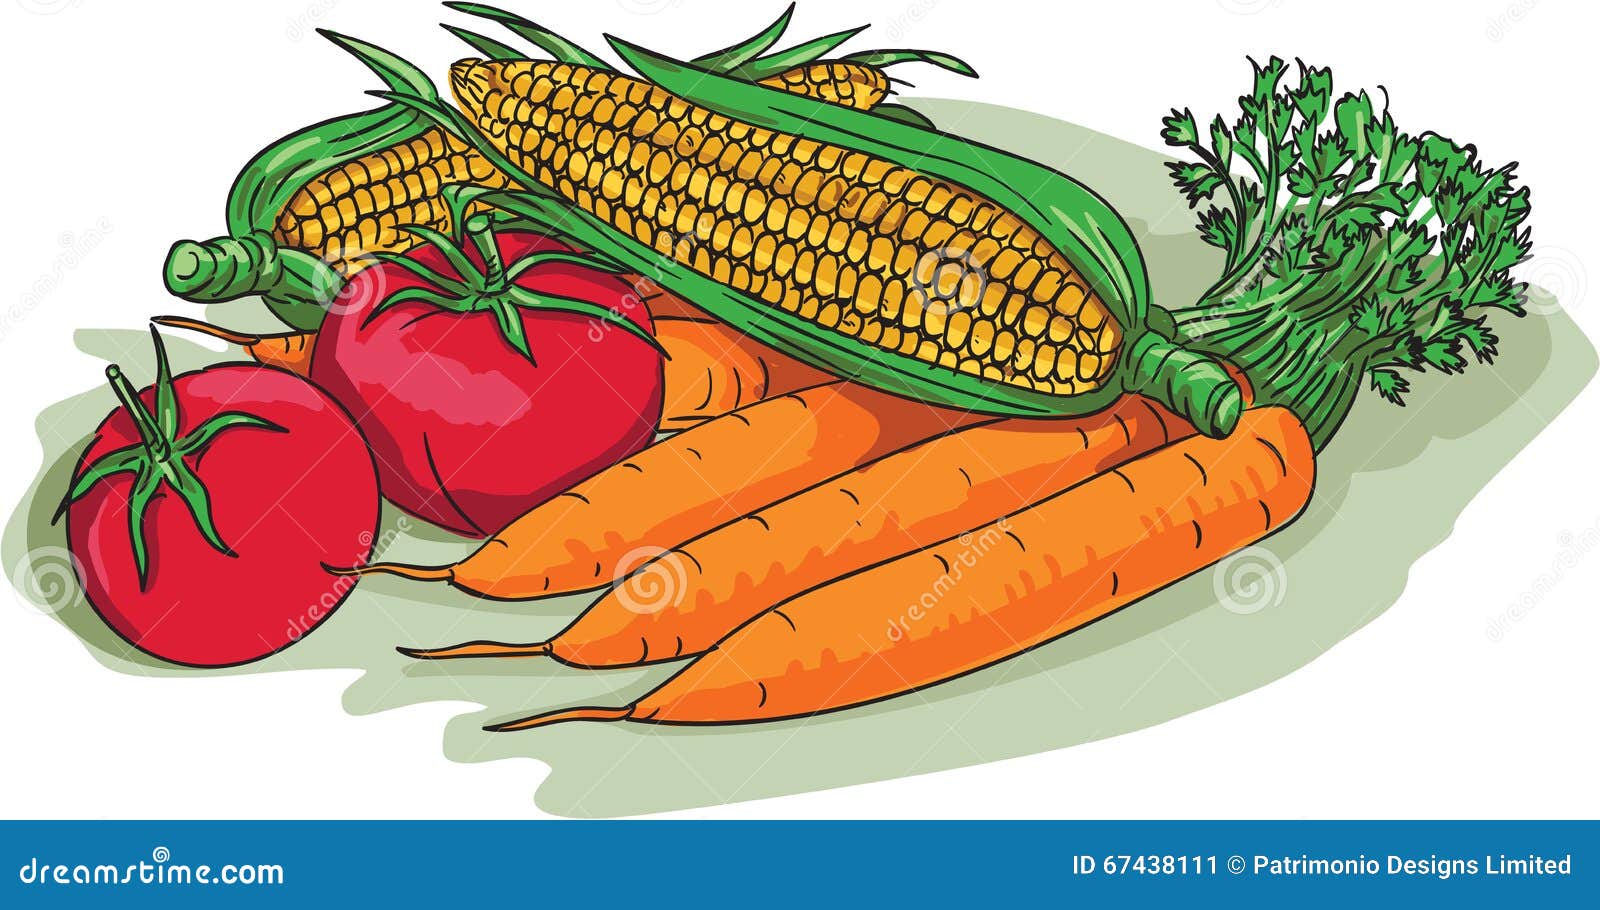 Vegetable Garden Crop Harvest Drawing Stock Vector - Illustration of